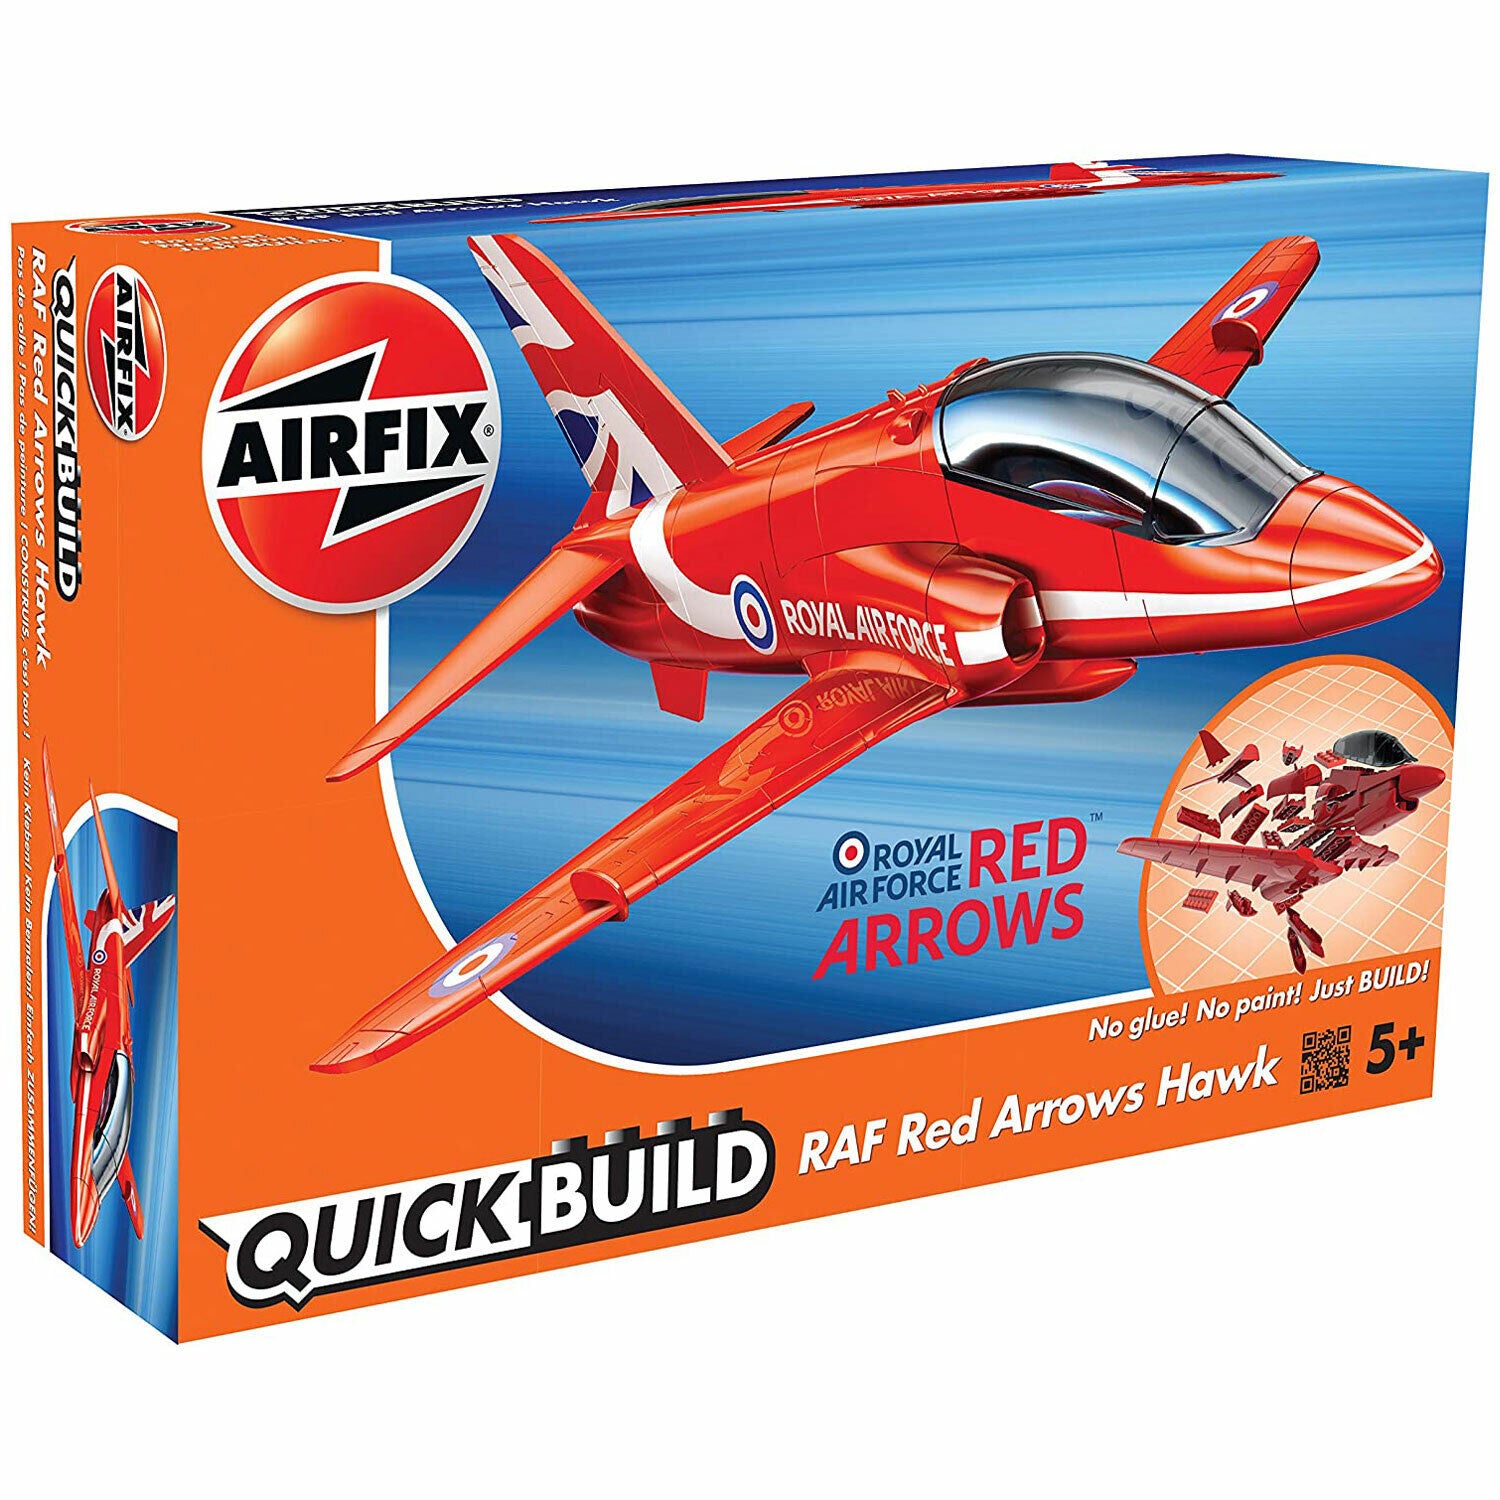 Airfix Quick Build Kit - RAF Red Arrows Hawk - NEW!